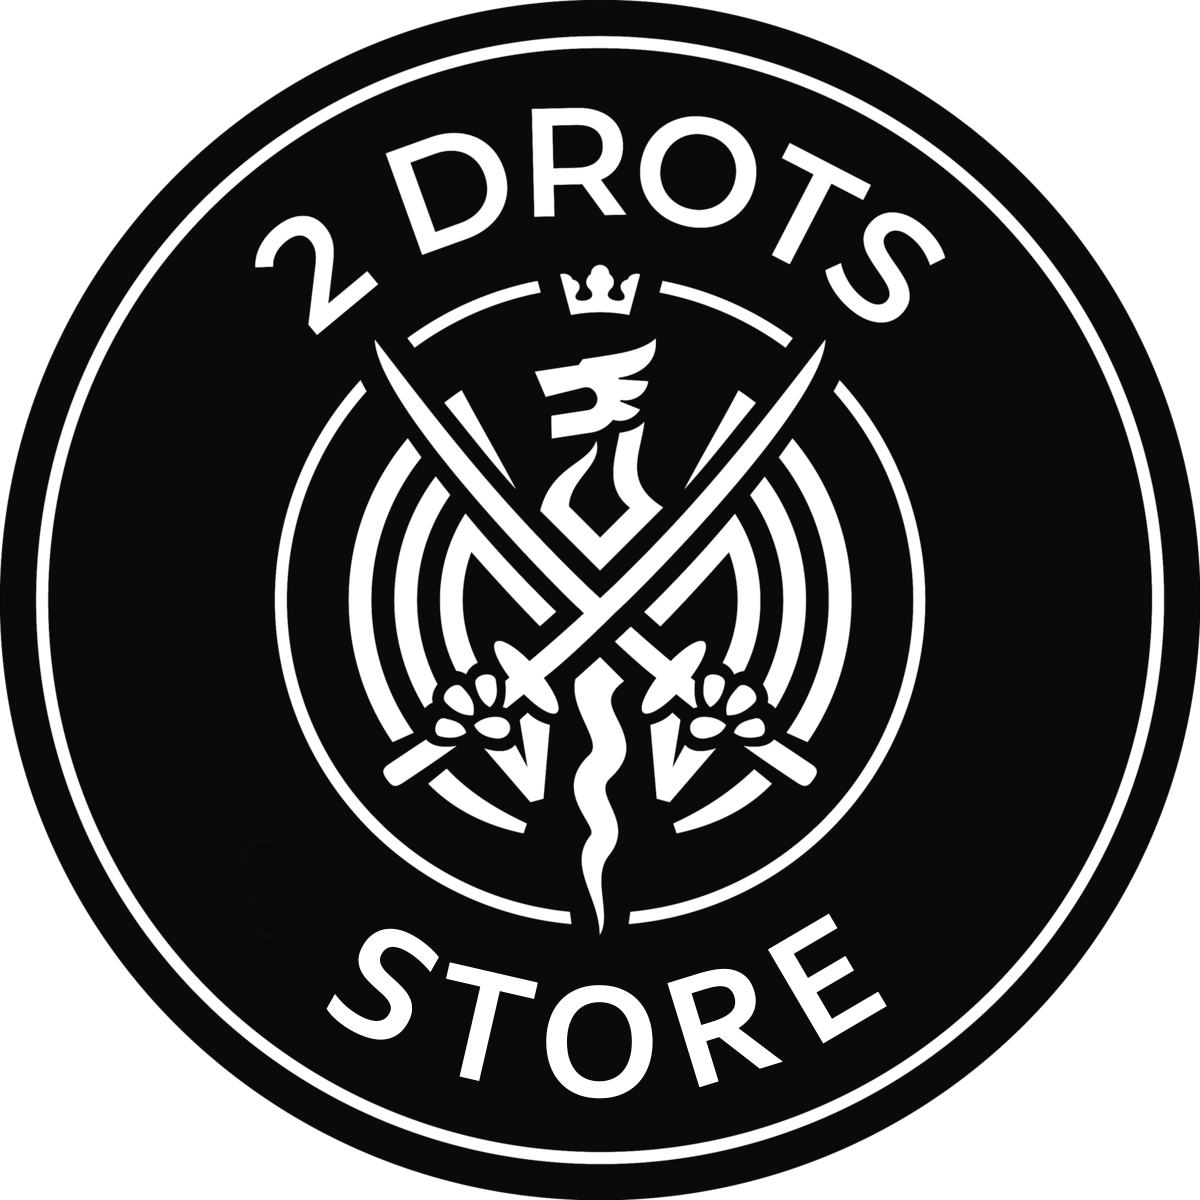 2drots store